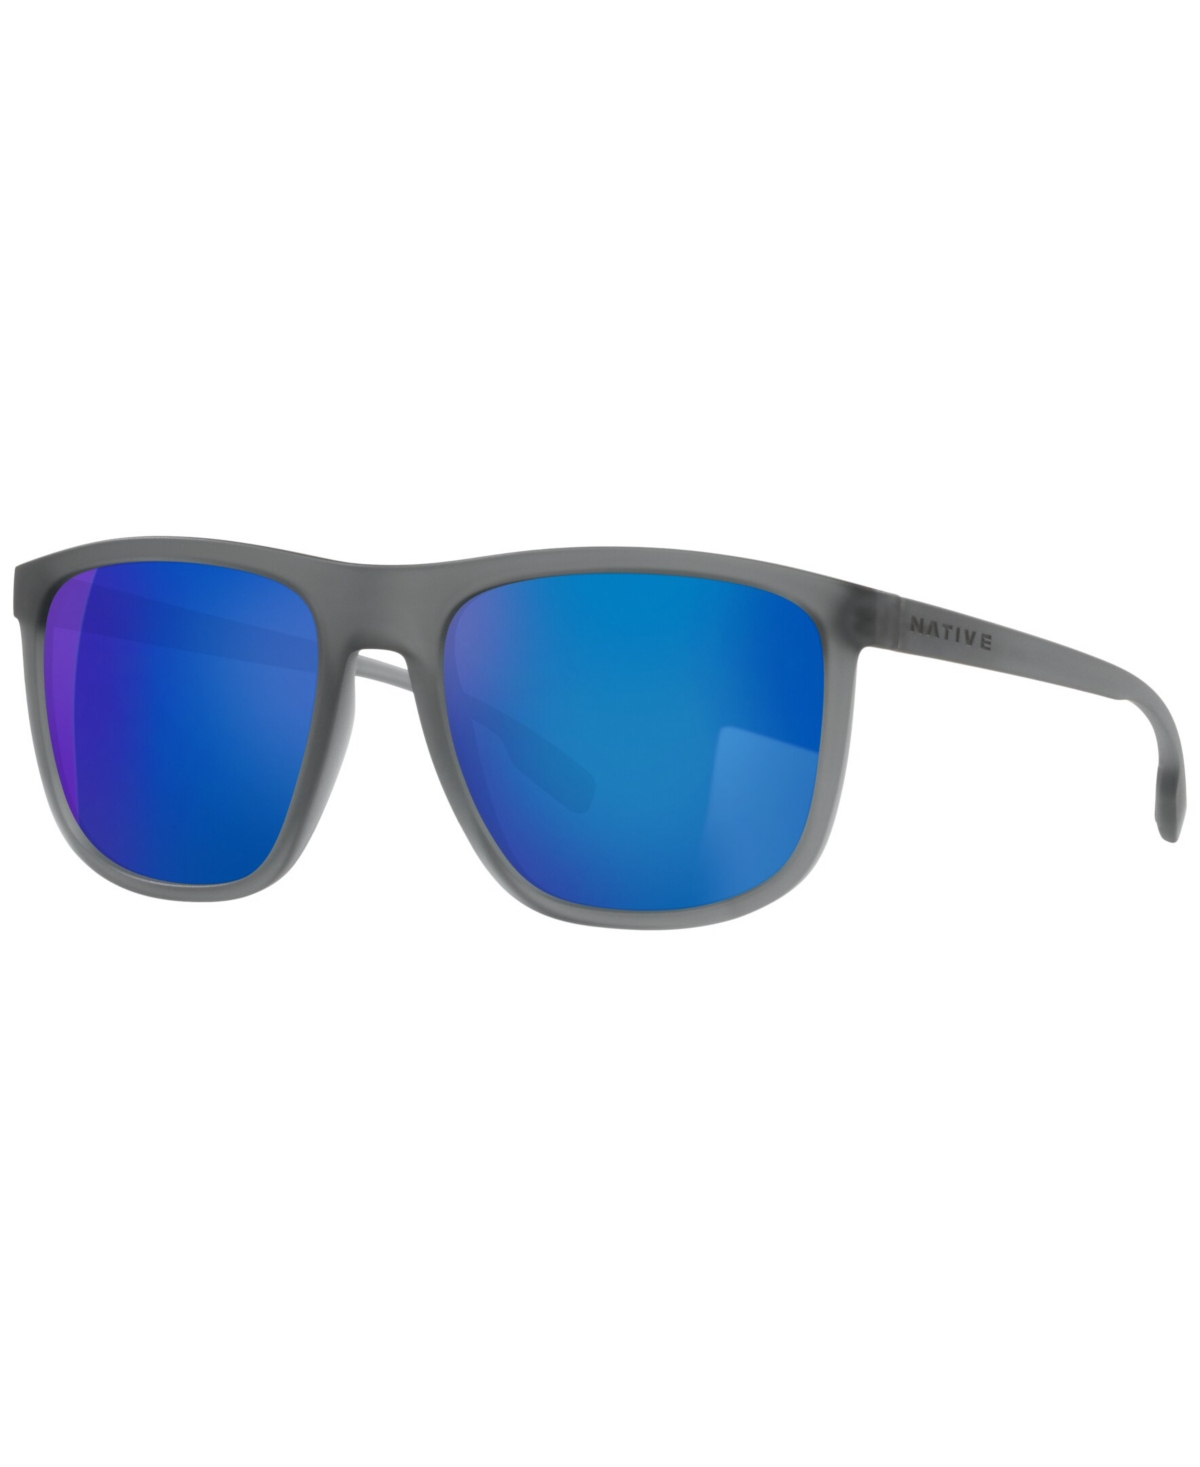 Native Unisex Polarized Sunglasses, XD9036 Mesa 57 - Matte Smoke Crystal